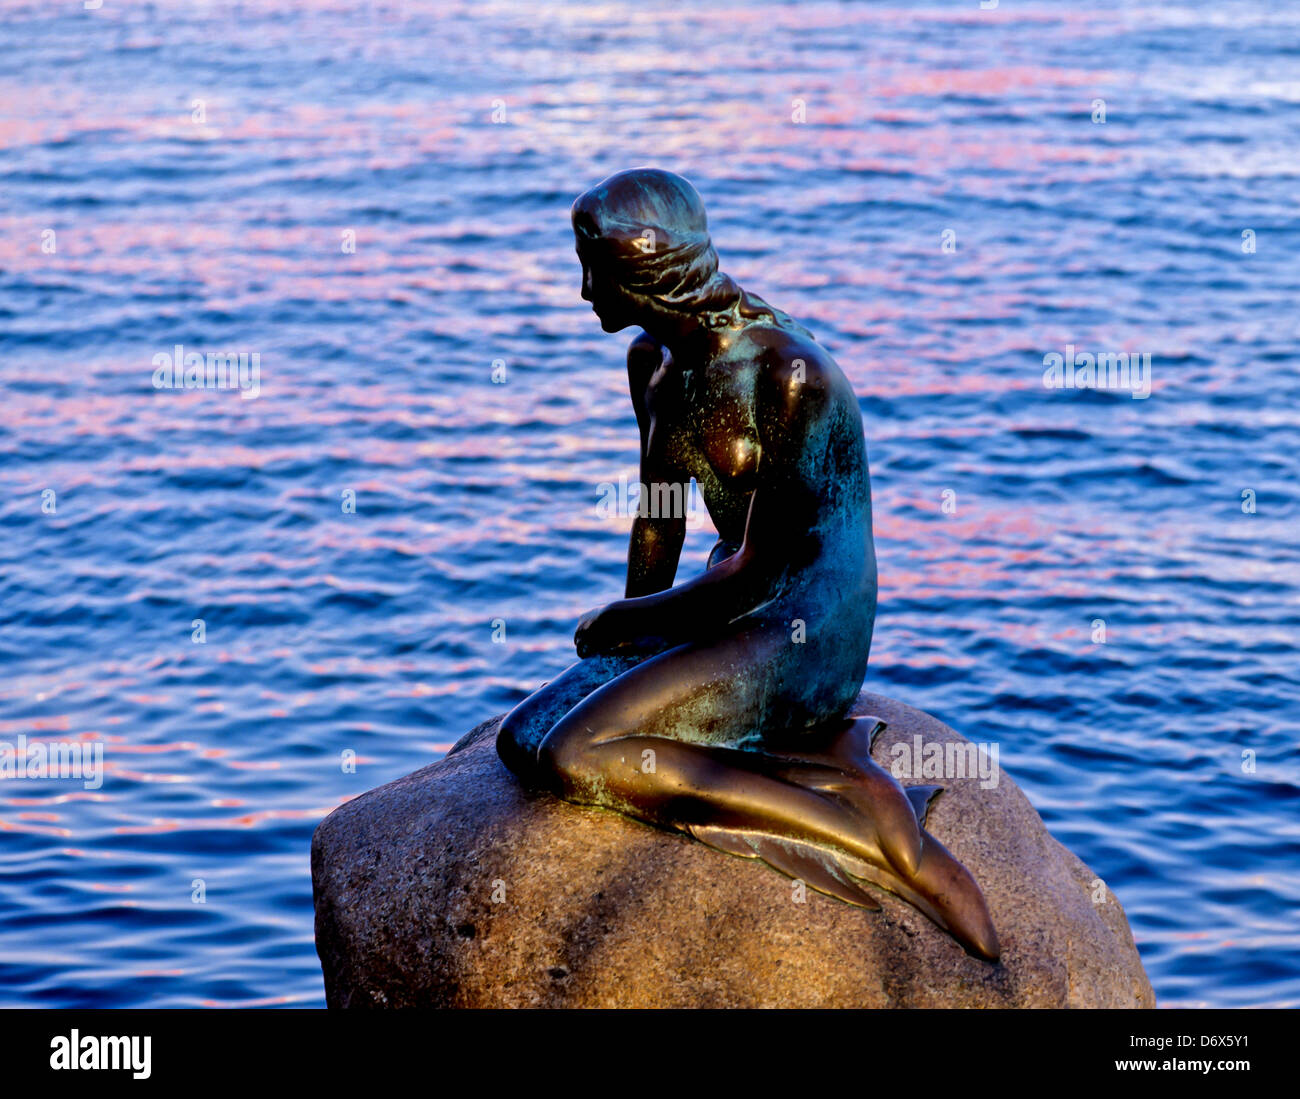 8573. Little Mermaid, Copenhagen, Denmark, Europe Stock Photo - Alamy